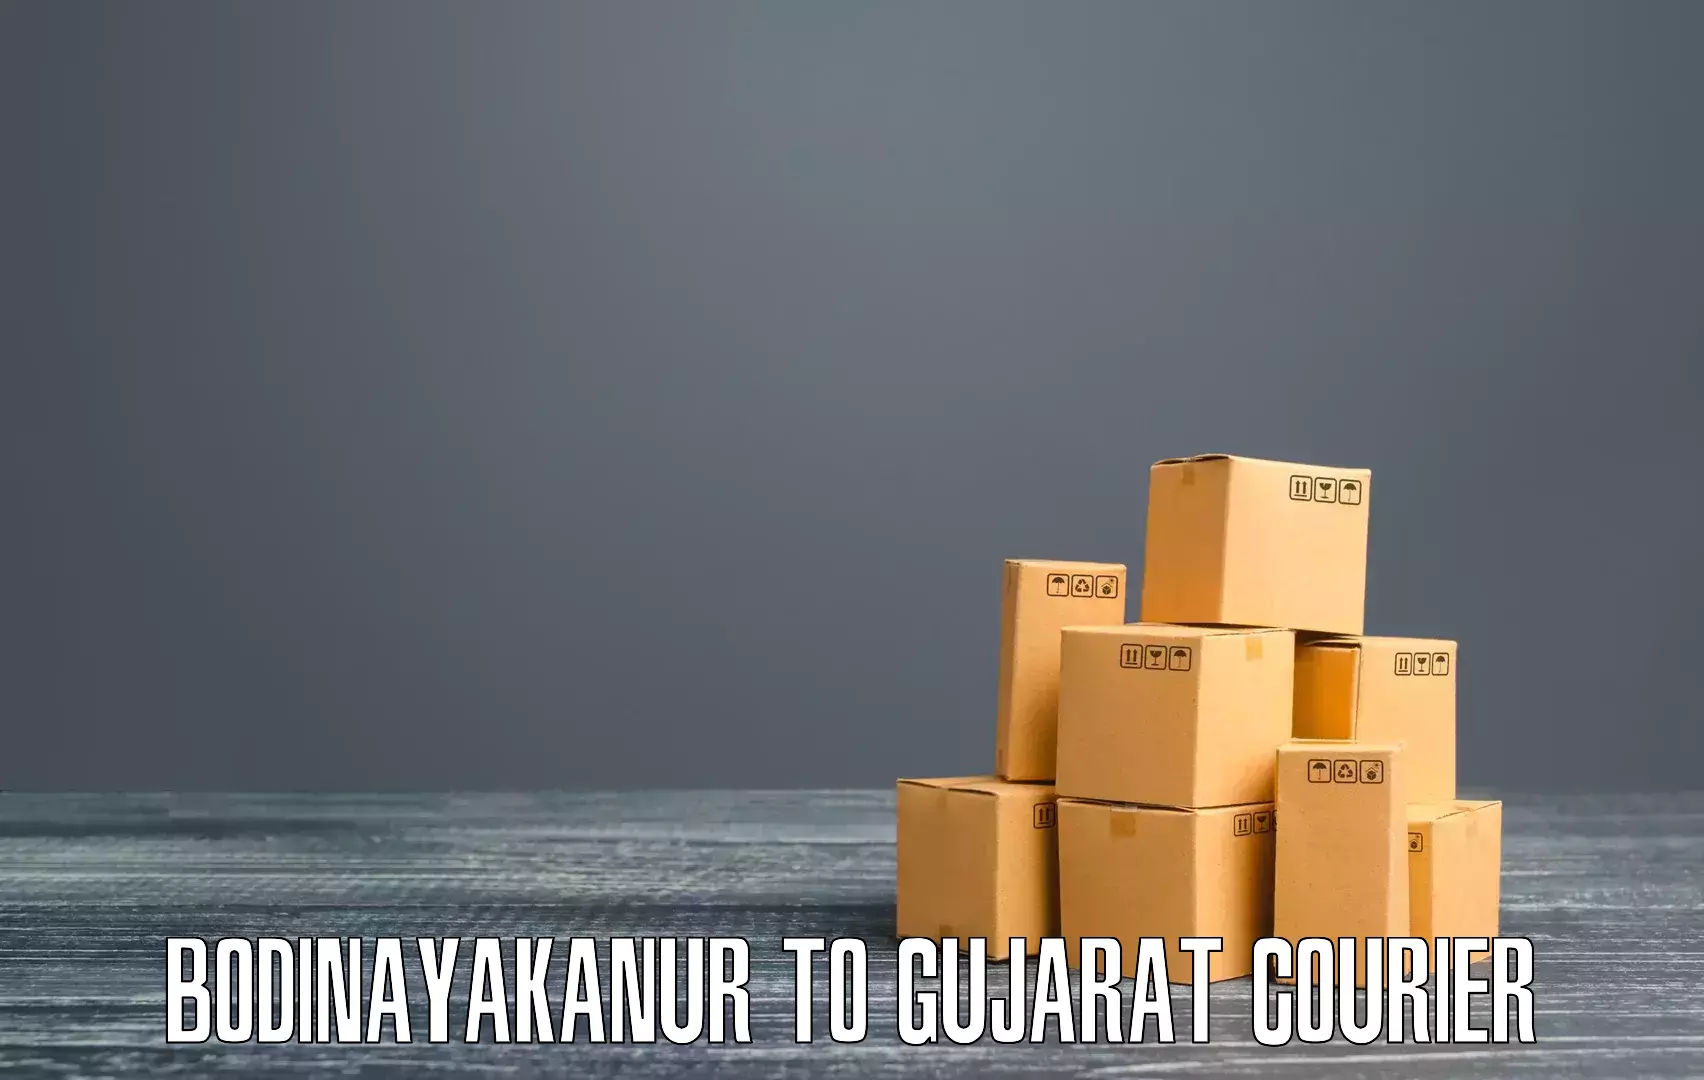 Express delivery network Bodinayakanur to Gujarat